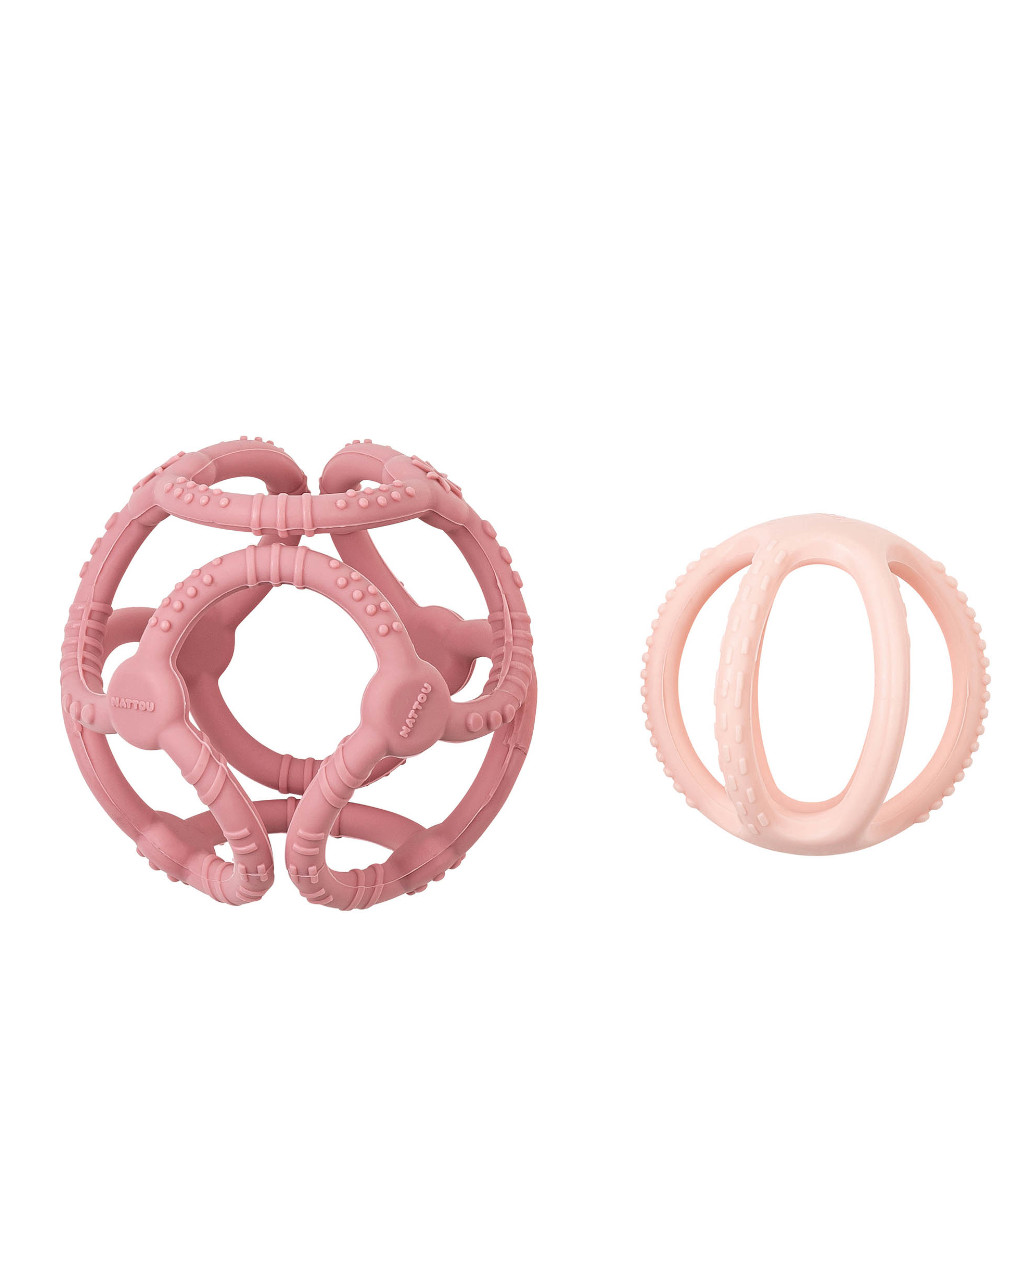 Lote de 2 bolas de silicona rosa - nattou - Nattou